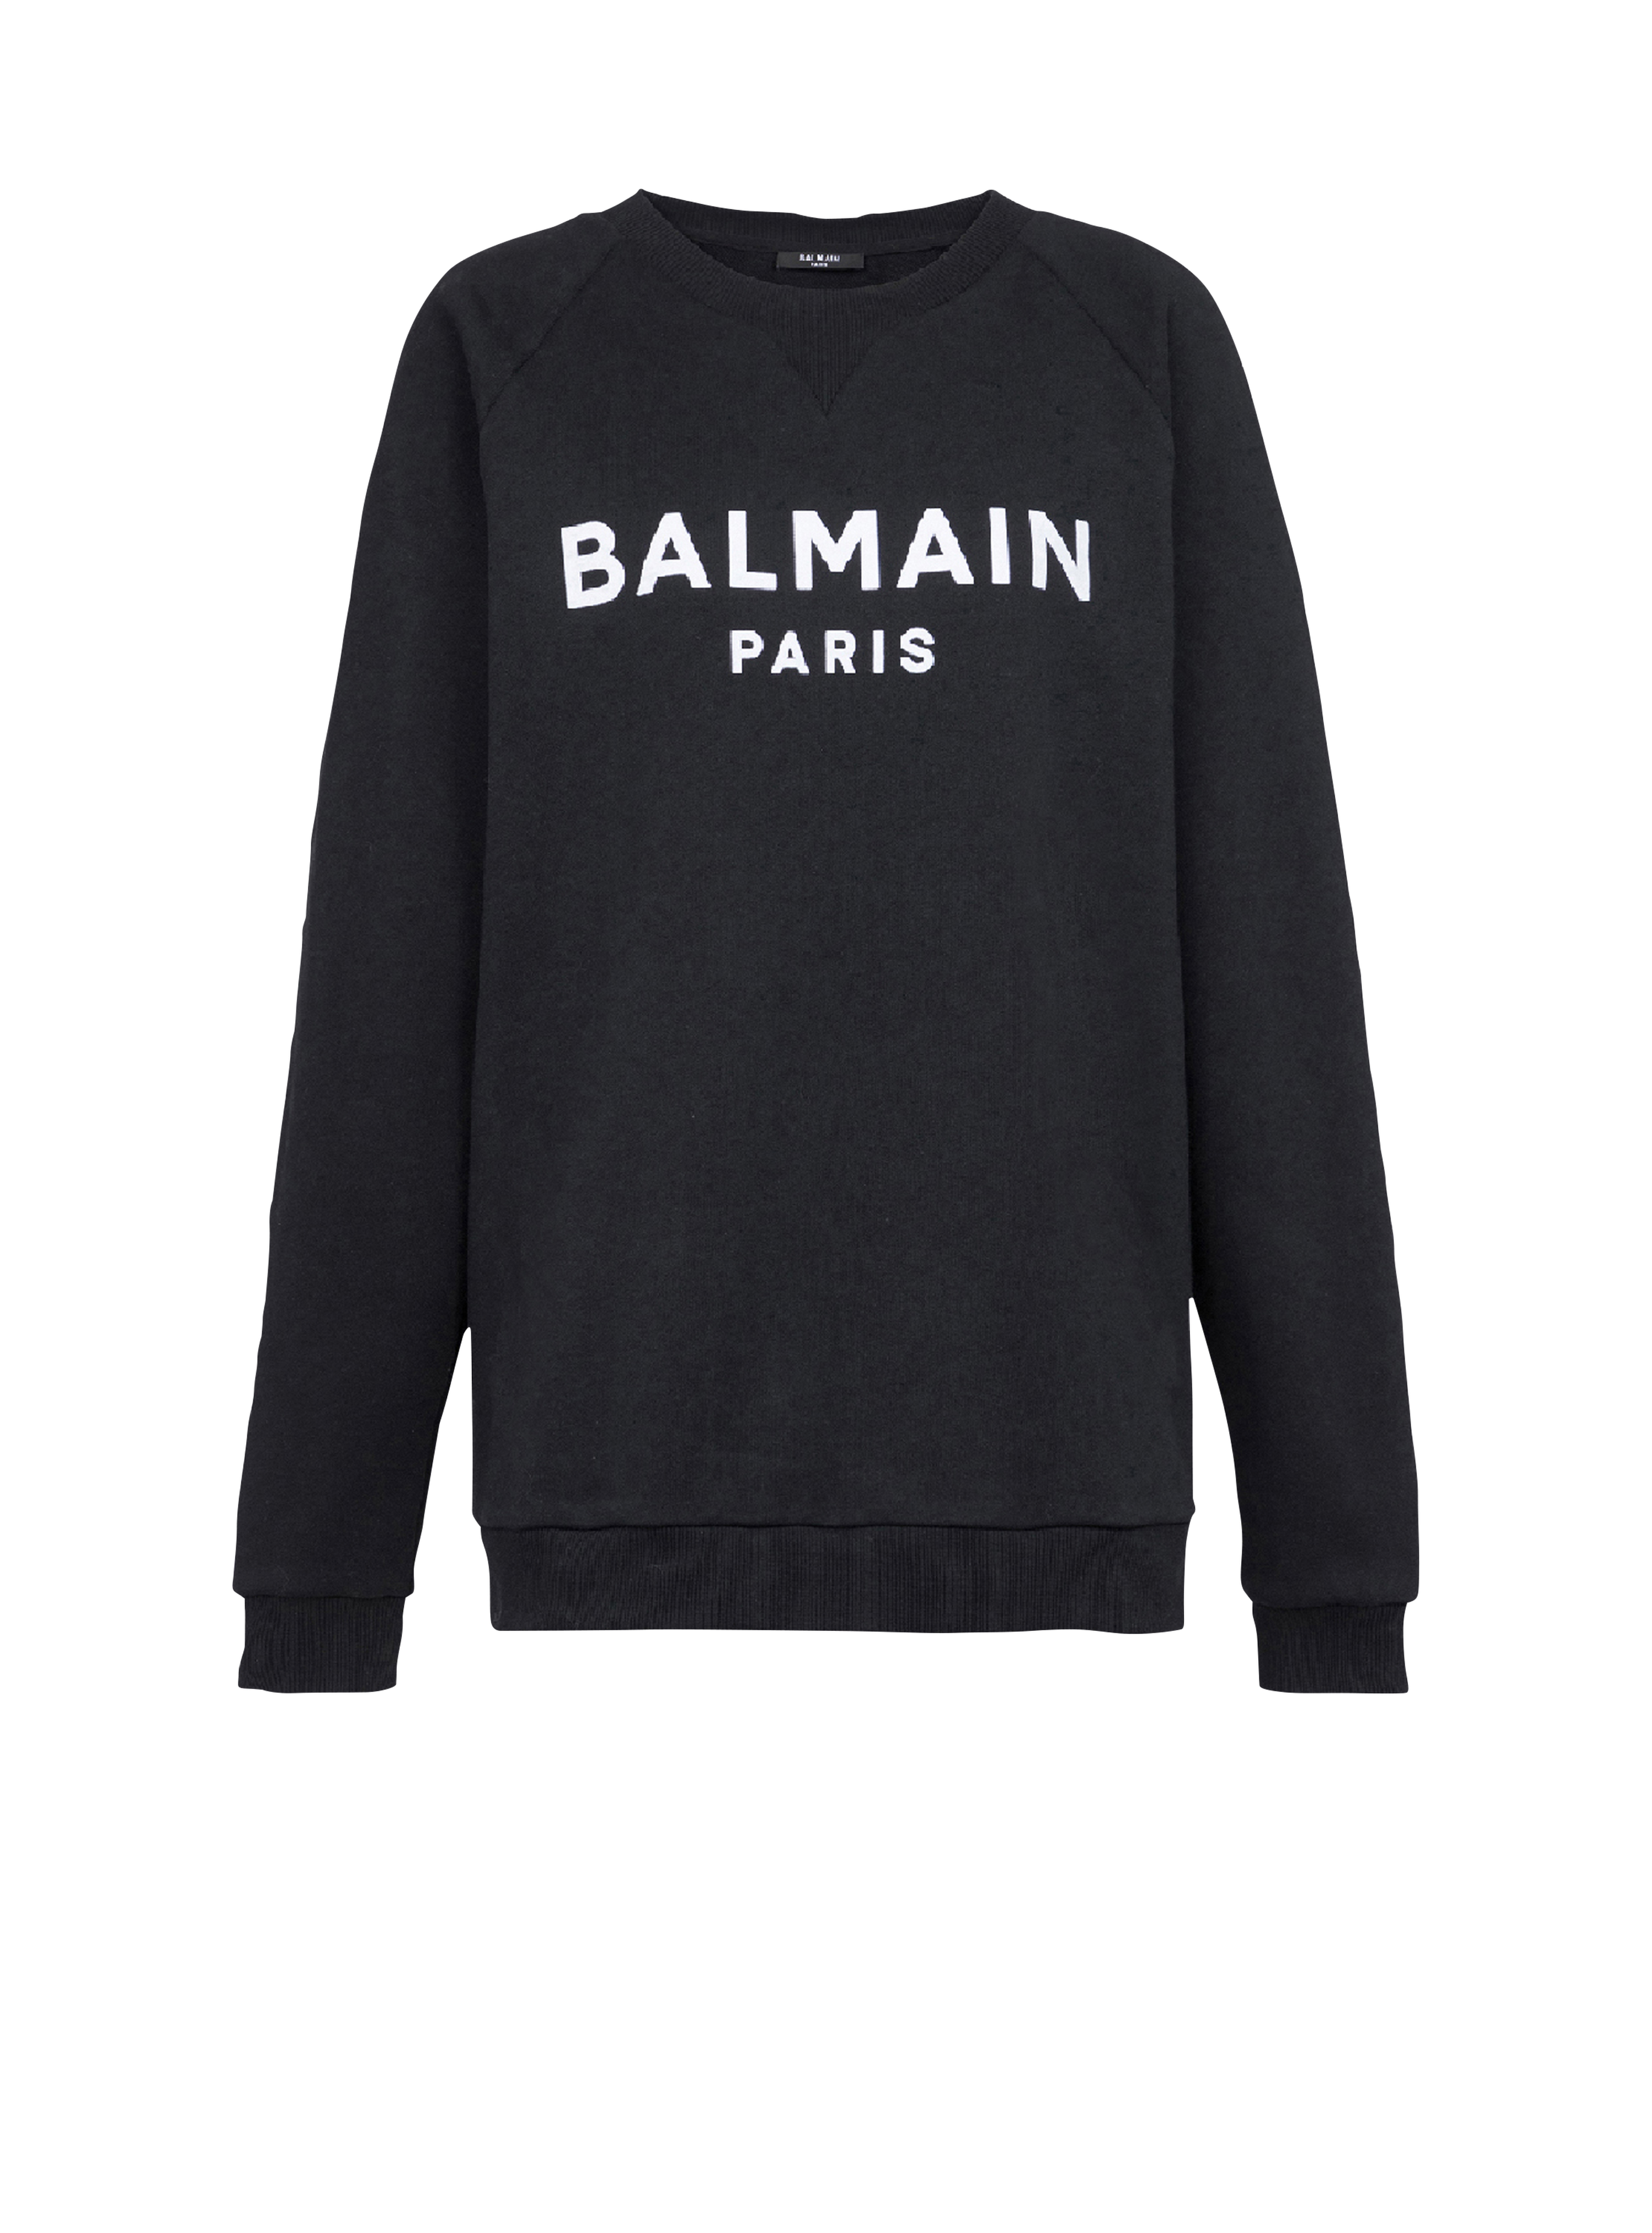 Cotton eco-designed sweatshirt with flocked Balmain logo, black